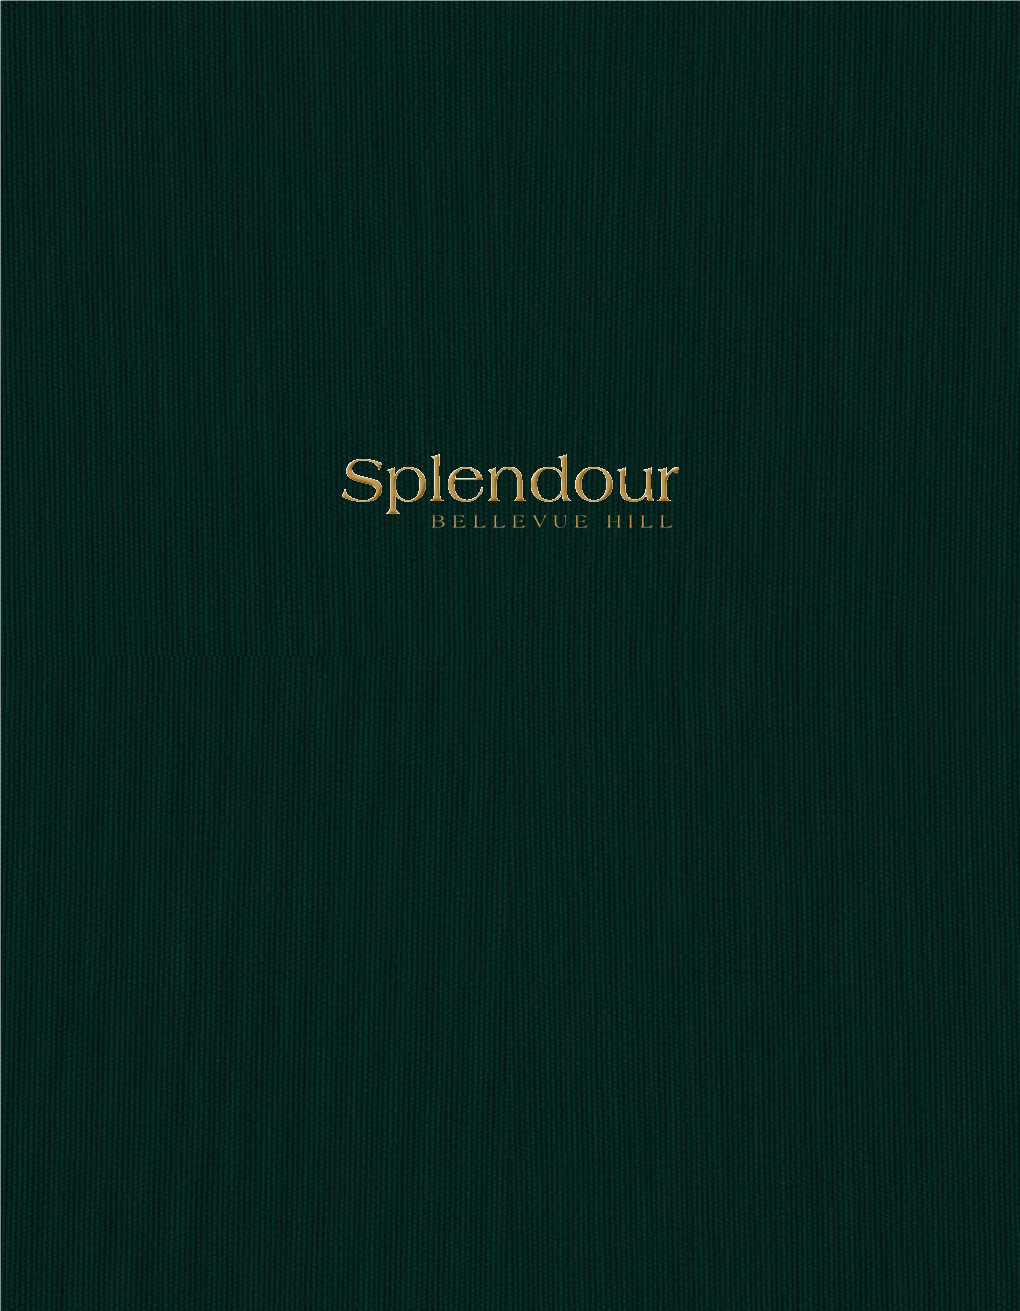 Splendour “Study Nature, Love Nature, Stay Close to Nature